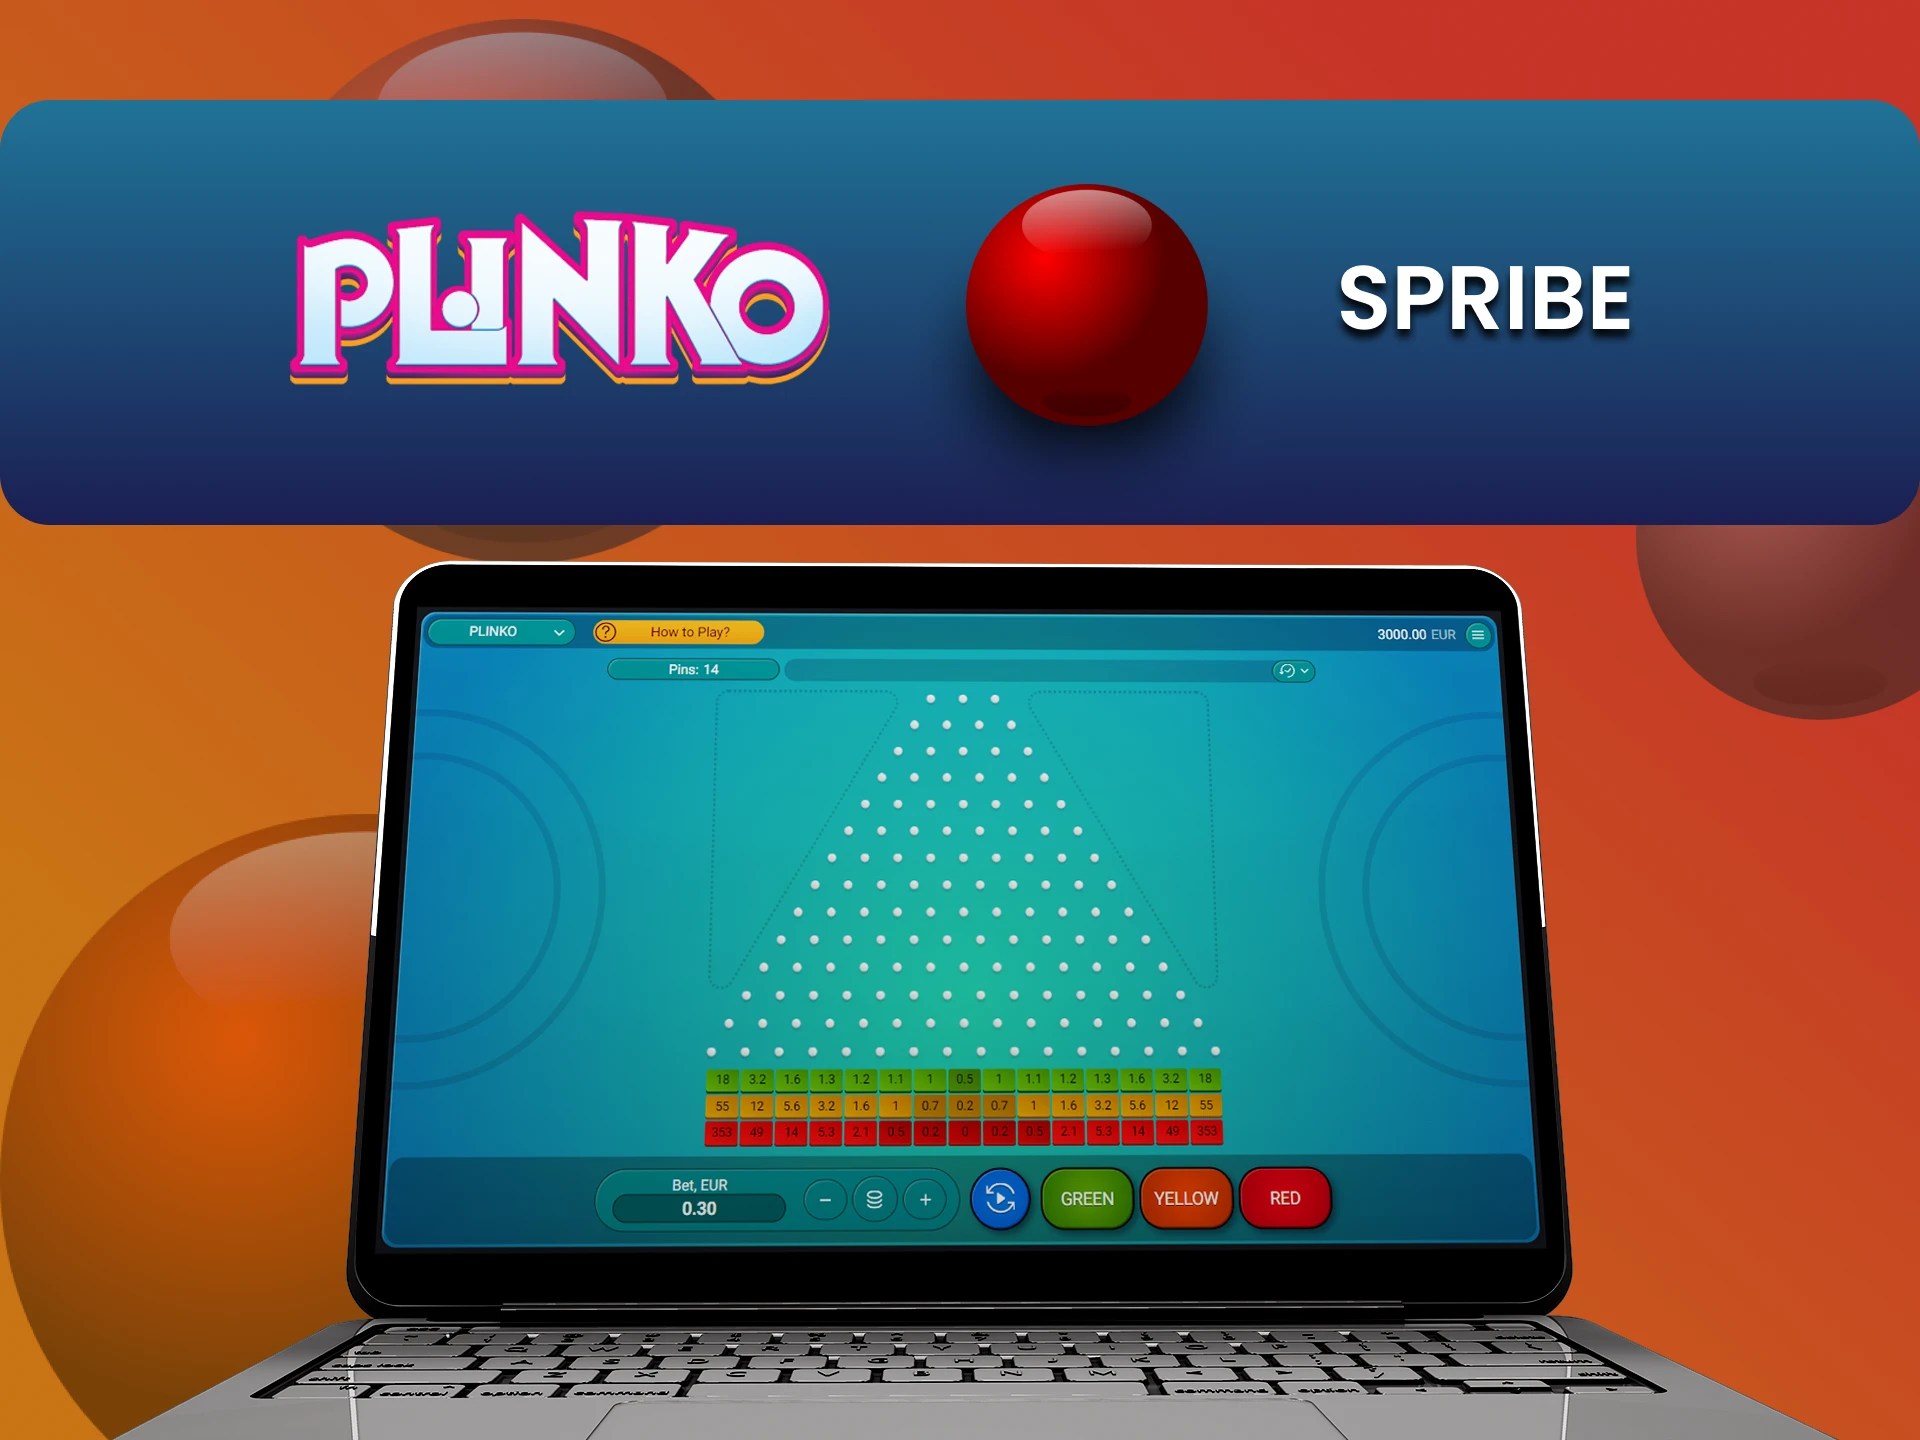 To play, choose Plinko by Spribe.